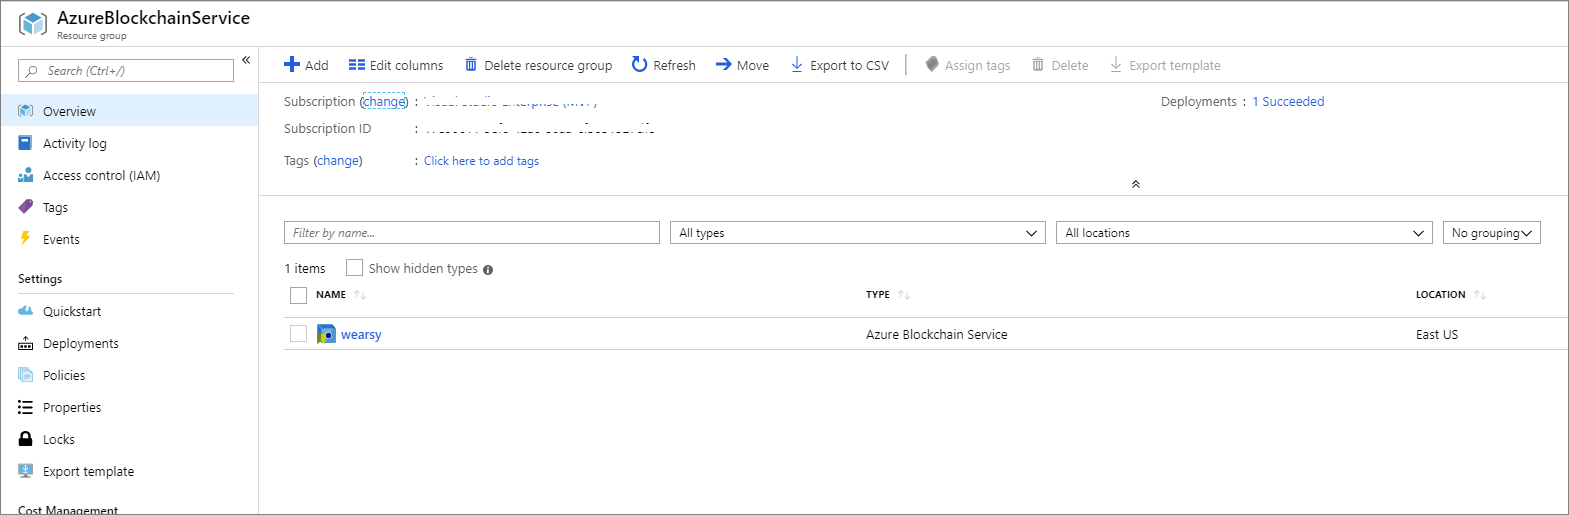 Azure Blockchain Services events using Azure Logic Apps